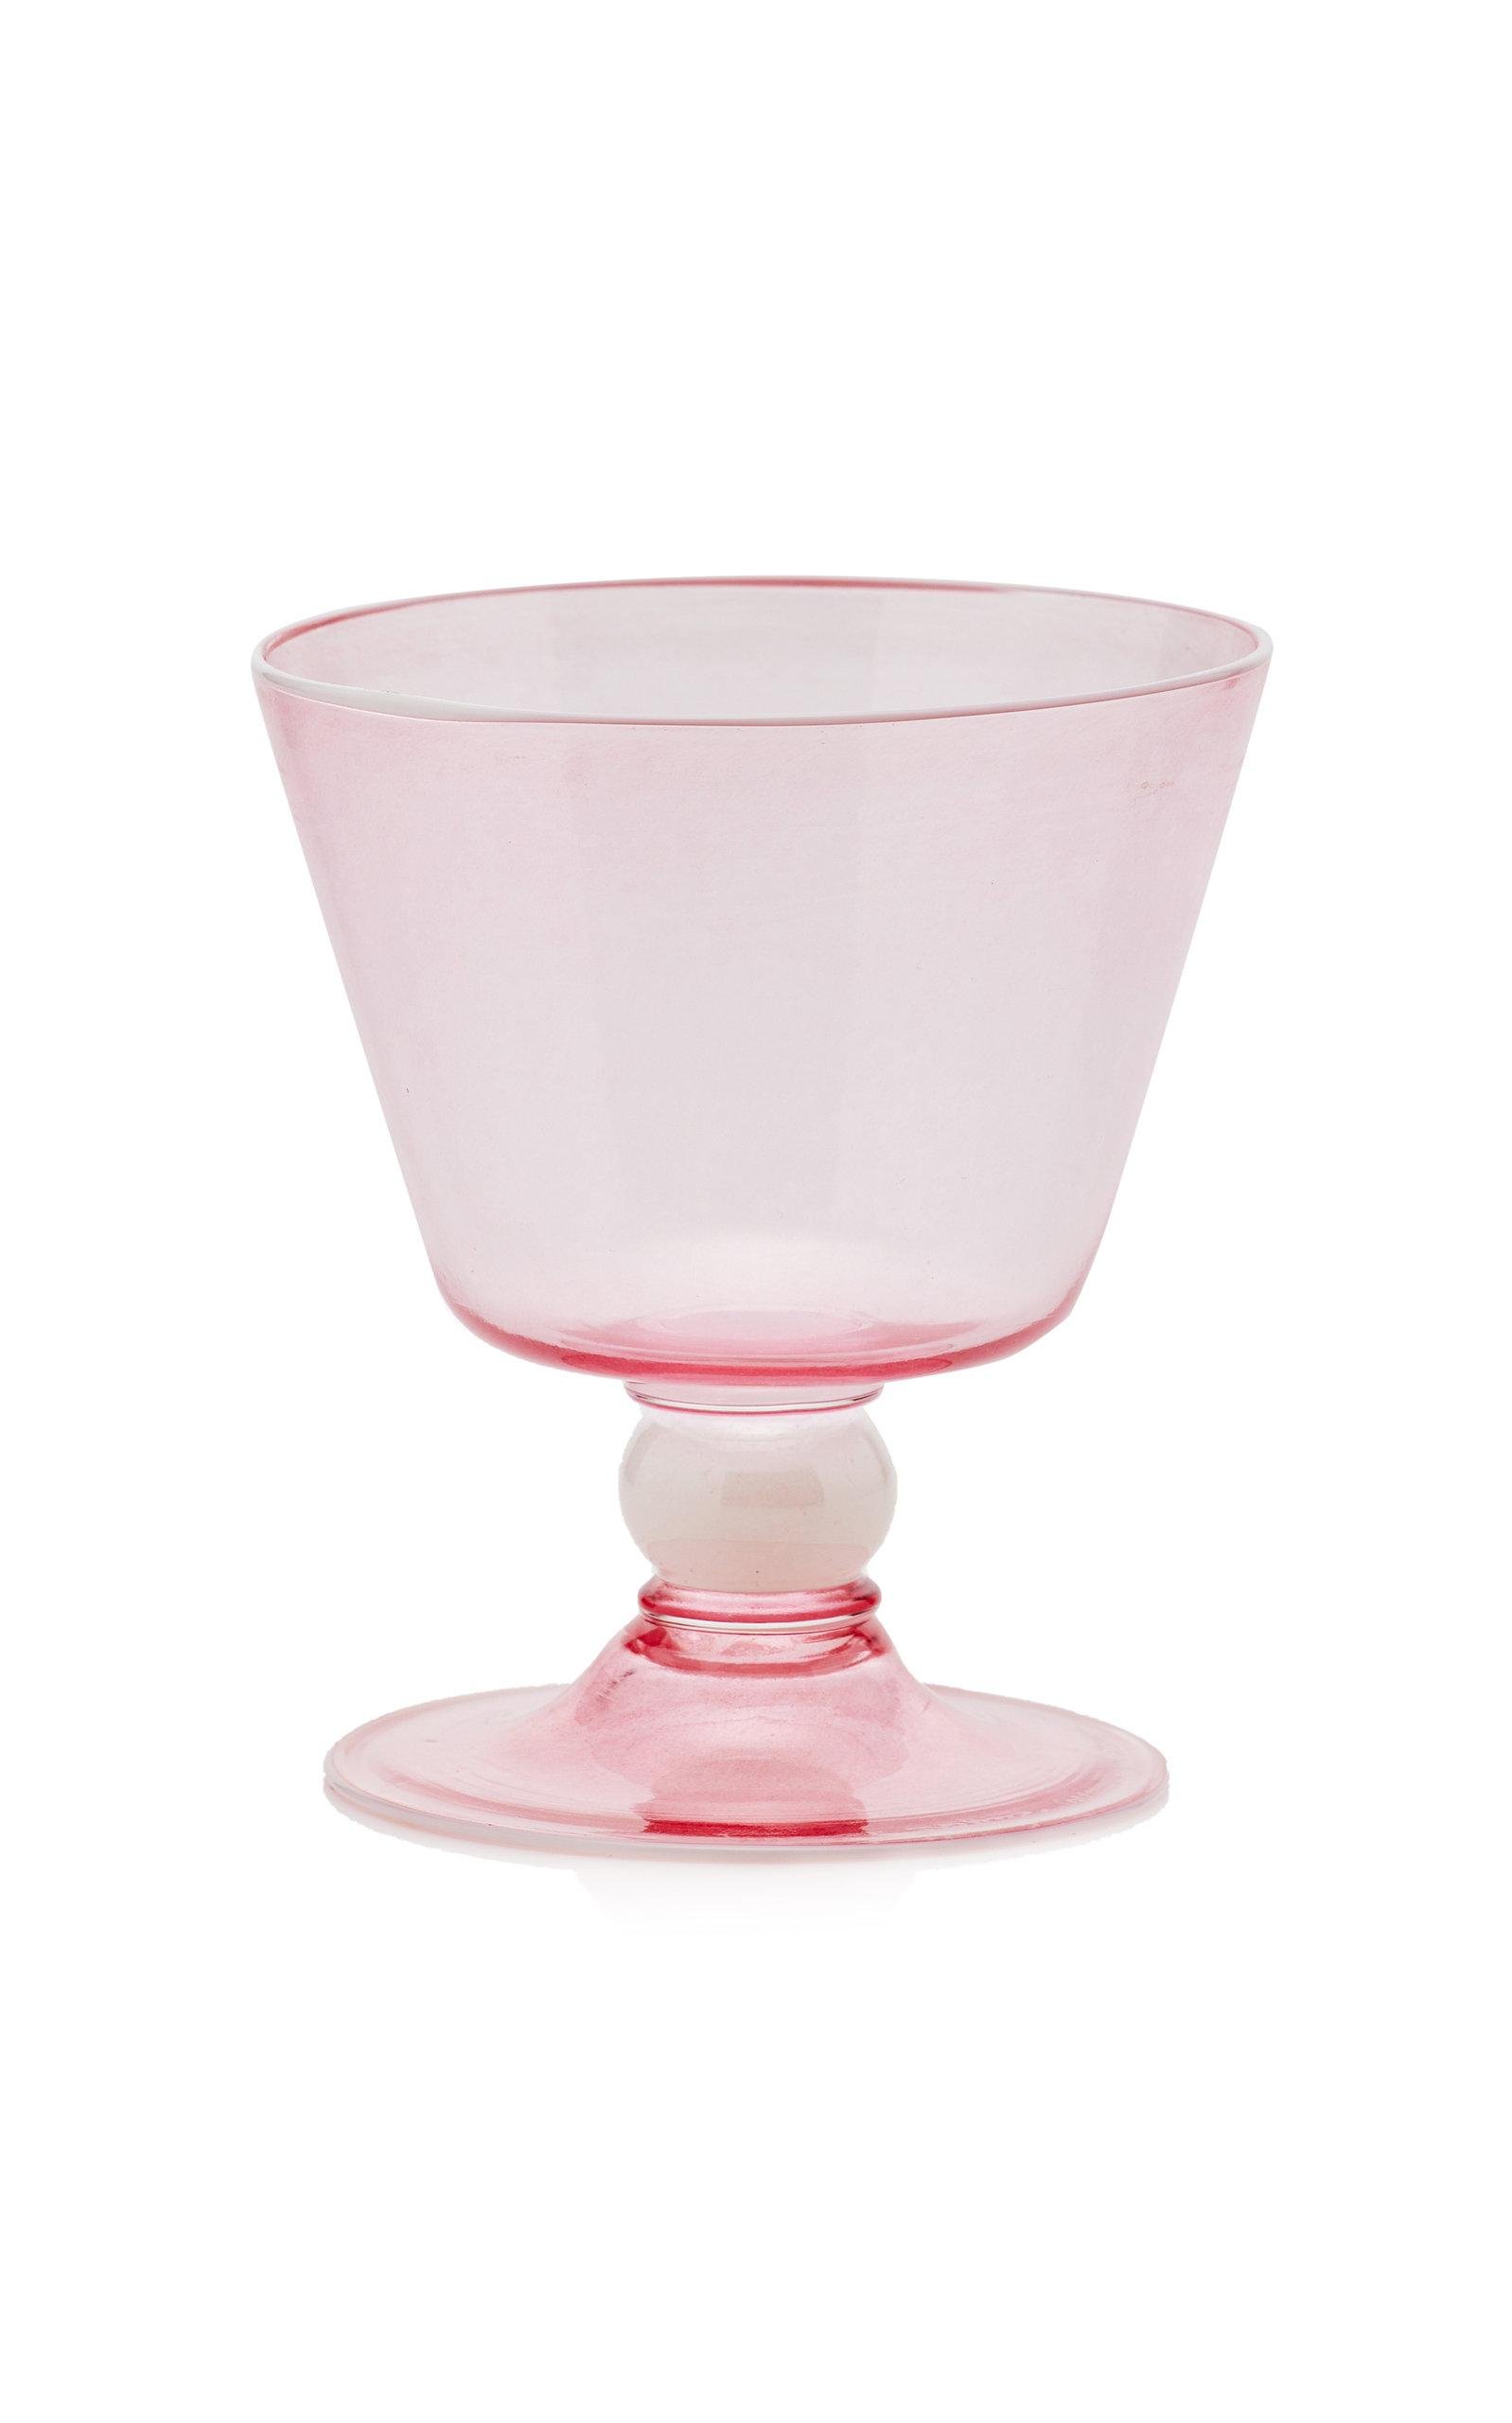 Moda Domus - Footed Wine Glass - Pink - Moda Operandi by MODA DOMUS